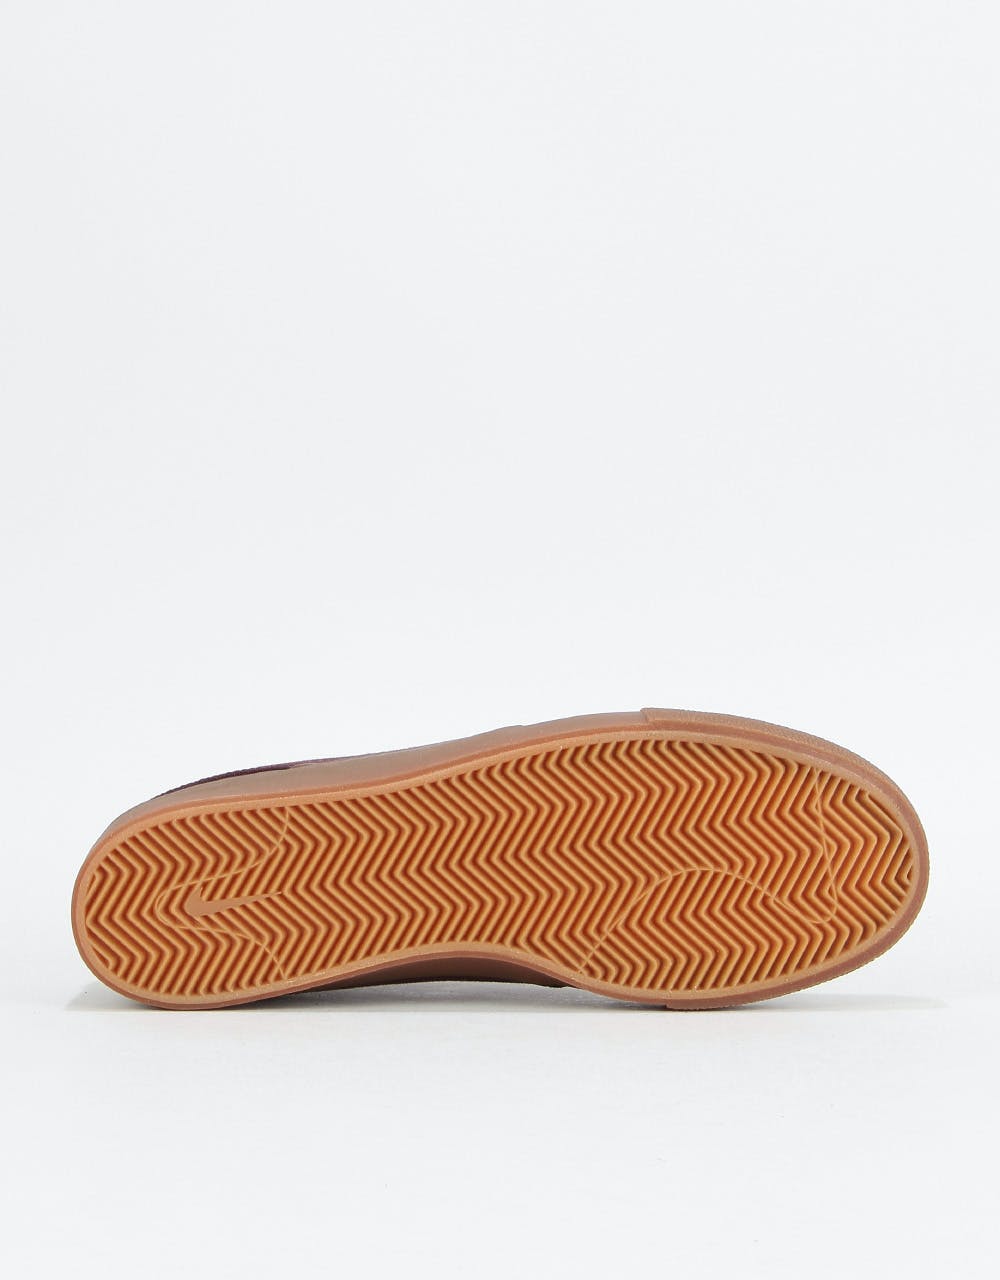 Nike SB Zoom Janoski RM Canvas Skate Shoes - Mahogany/White-Gum